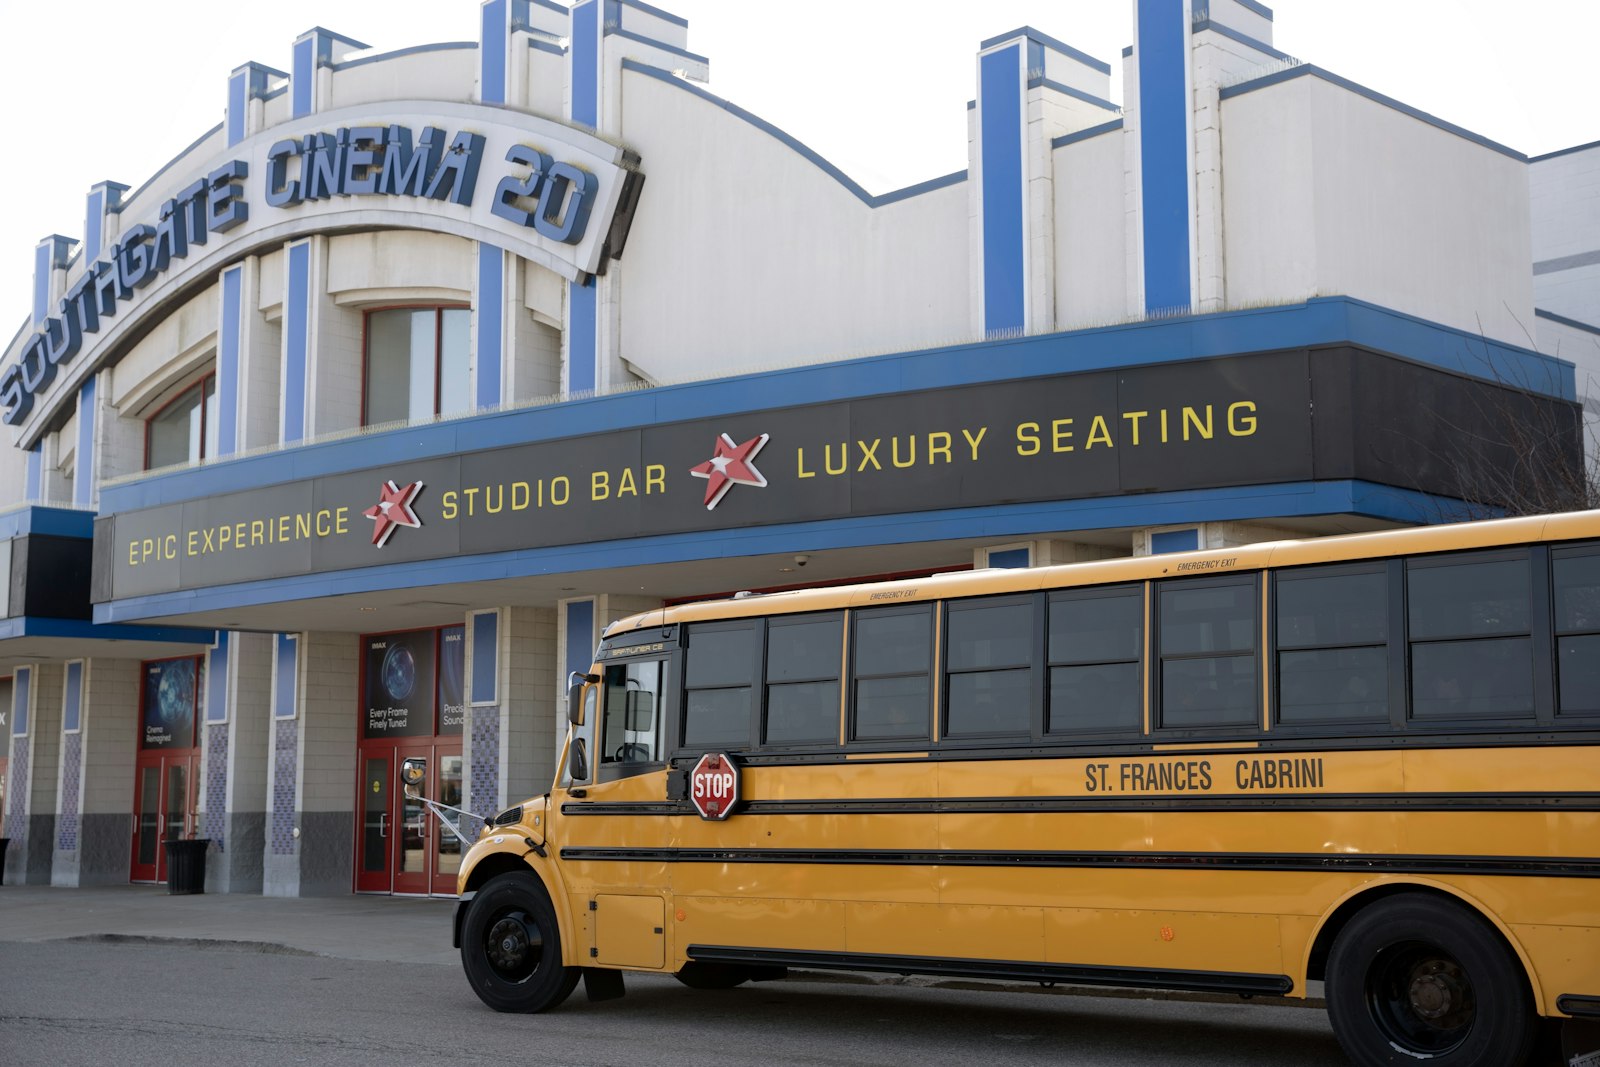 A Cabrini school bus parks outside the MJR Southgate Cinema on March 13. (Gabriella Patti | Detroit Catholic)